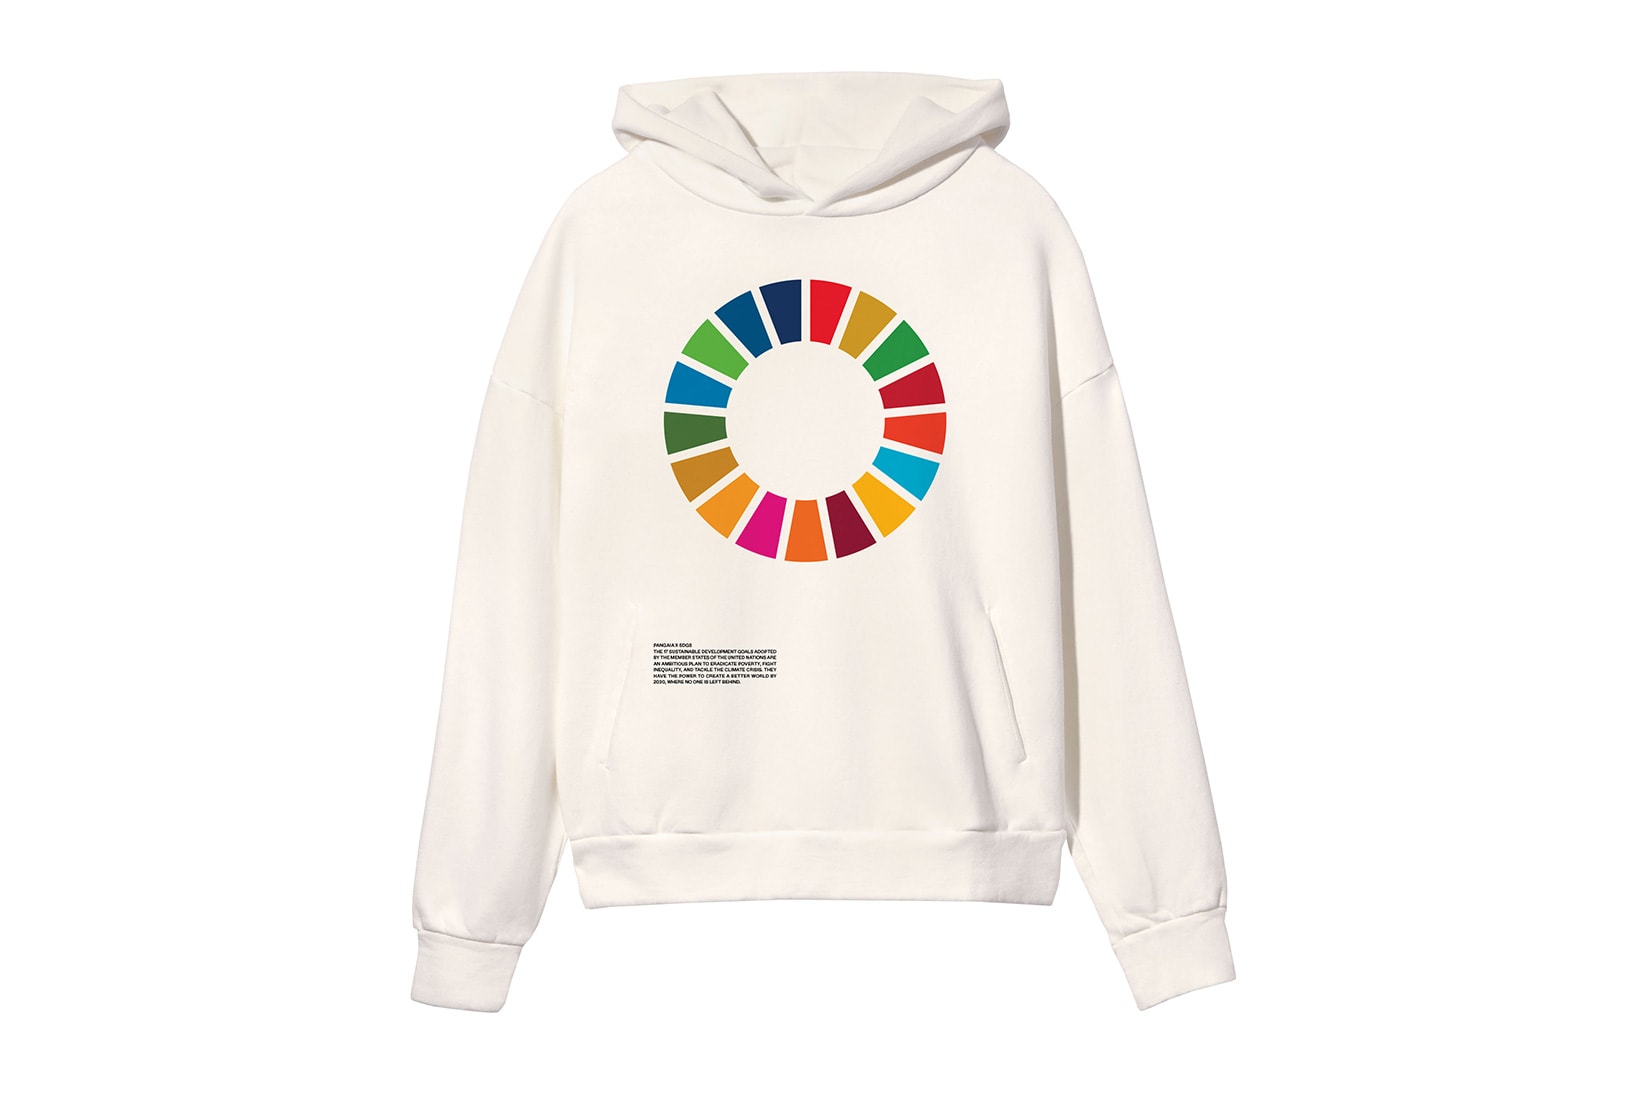 pangaia united nations sustainable development goals un sdgs global hoodies t-shirts collaboration capsule 